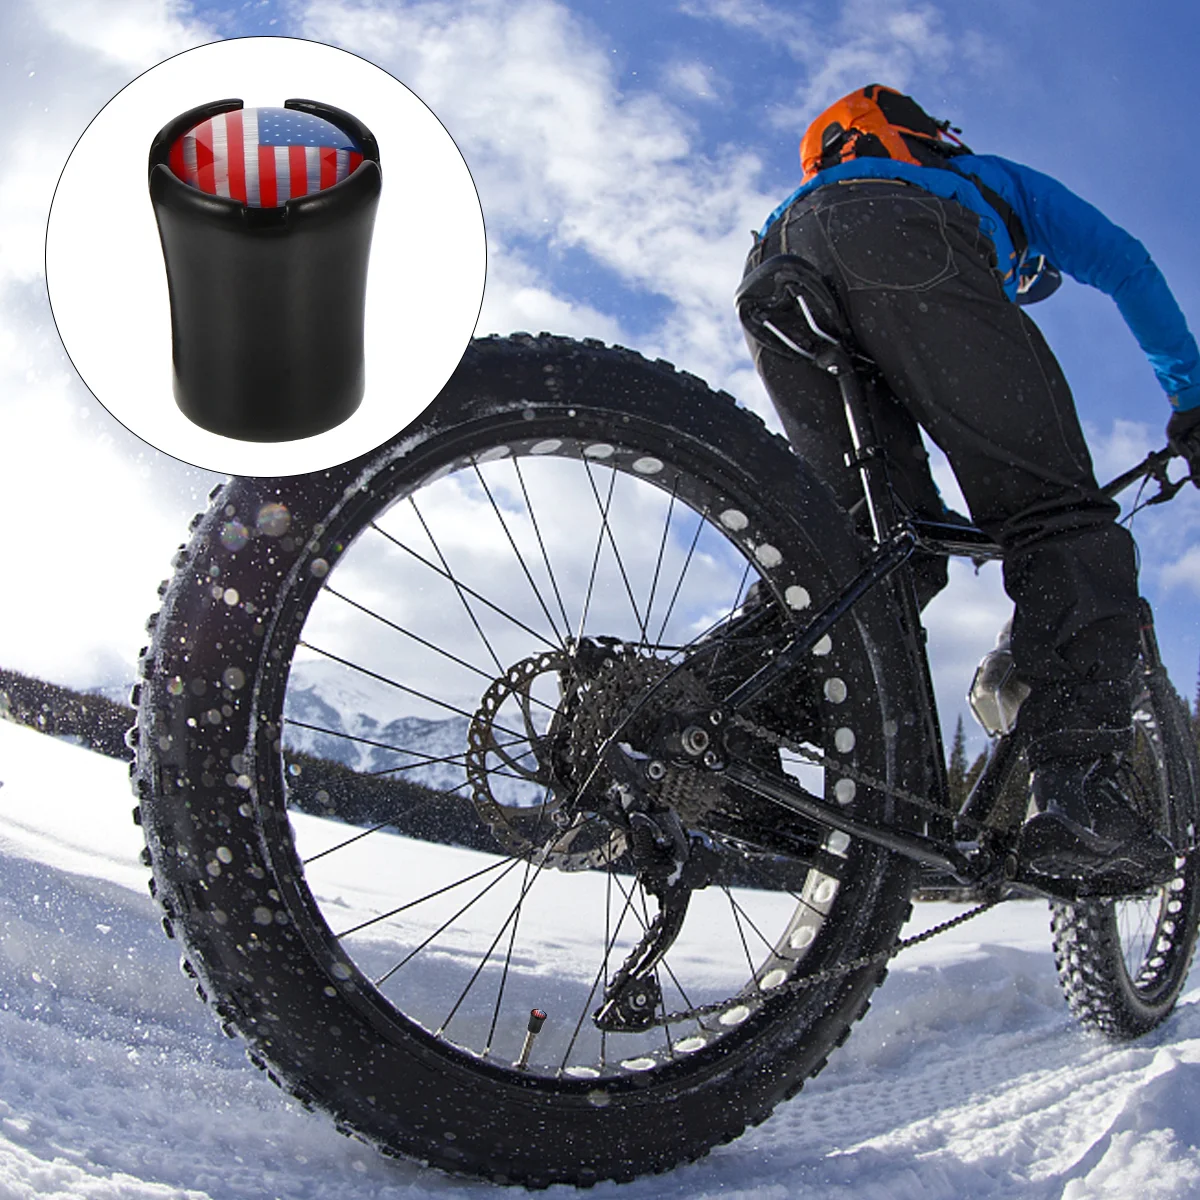 

4pcs American USA Flag Tire Stem Caps Black Universal Air Dust Covers Car Valve Bicycle parts